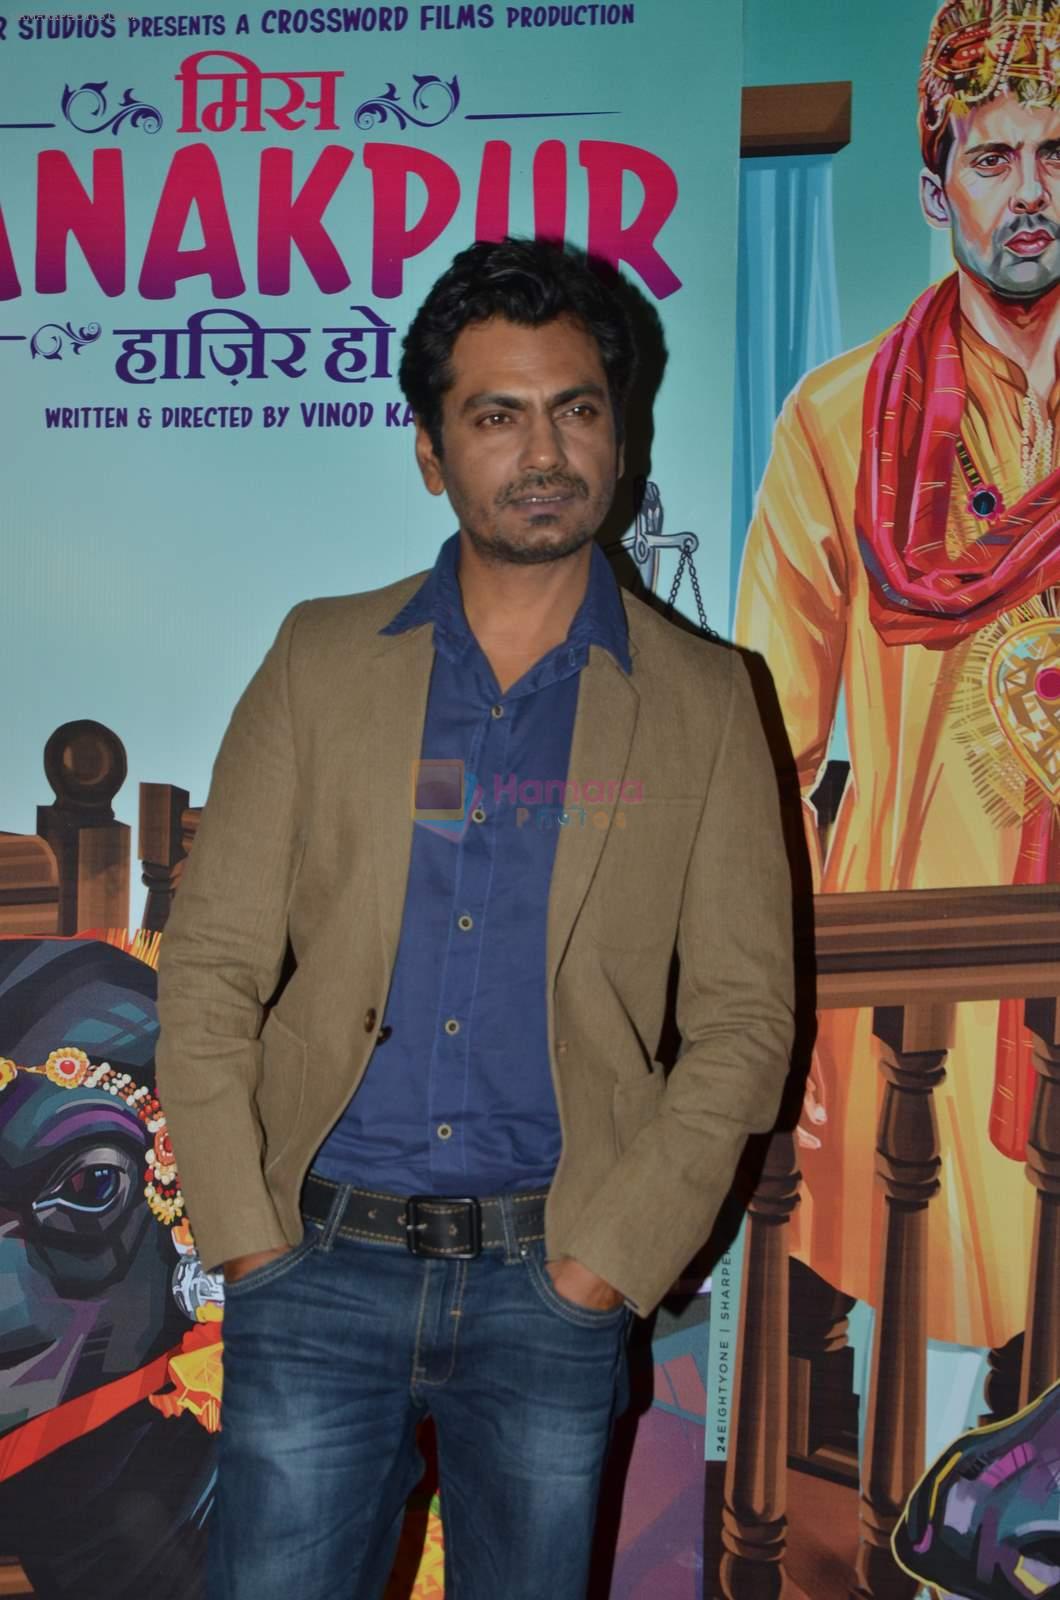 Nawazuddin Siddiqui  at Miss Tanakpur premiere in Mumbai on 25th June 2015